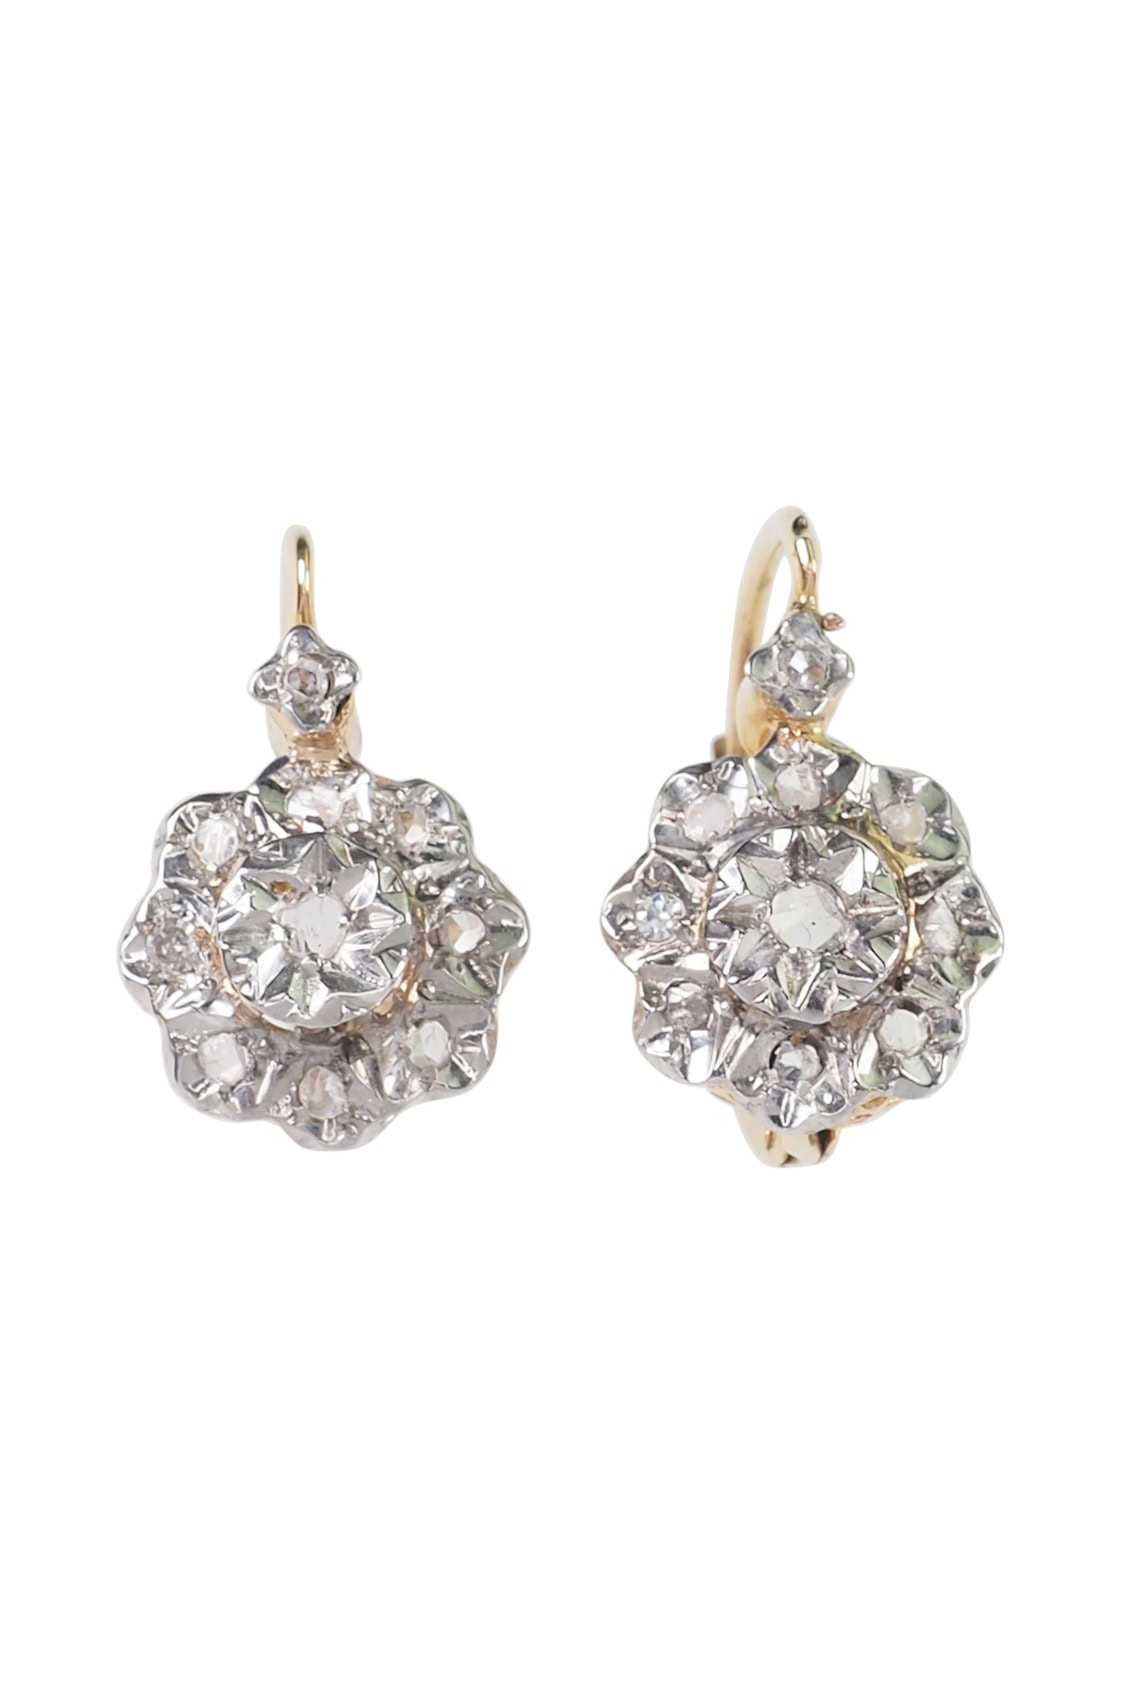 Art Nouveau Ohrringe mit Diamanten aus 18 Karat Gold